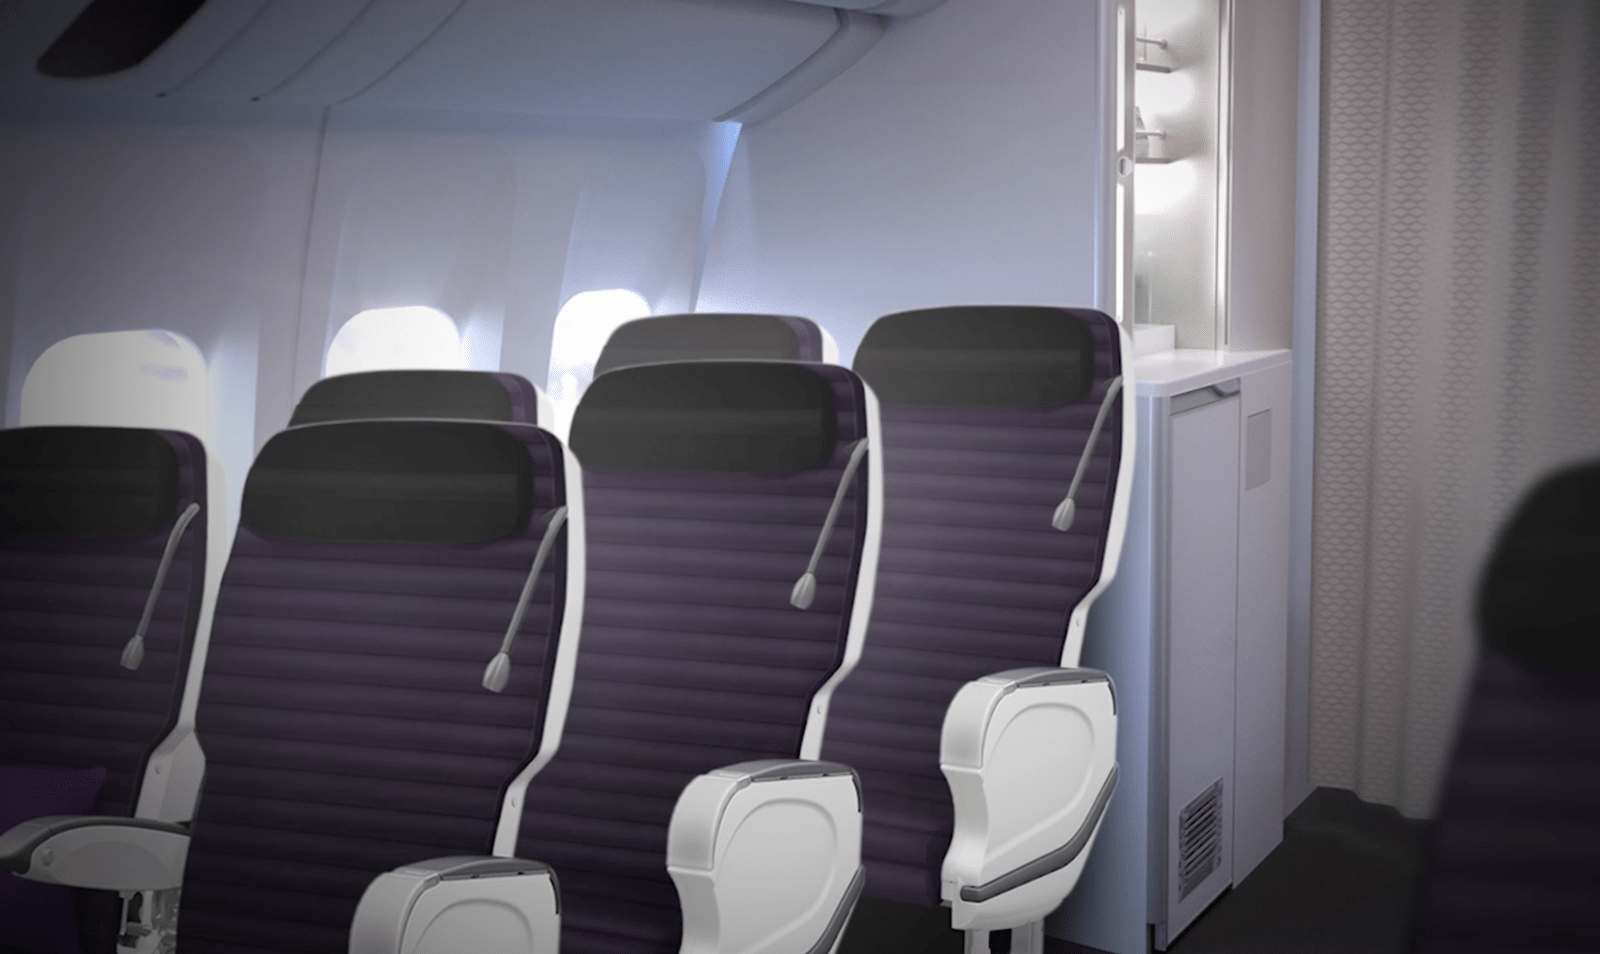 Virgin Australia reveals new Premium Economy cabin for its Boeing 777 aircraft. 